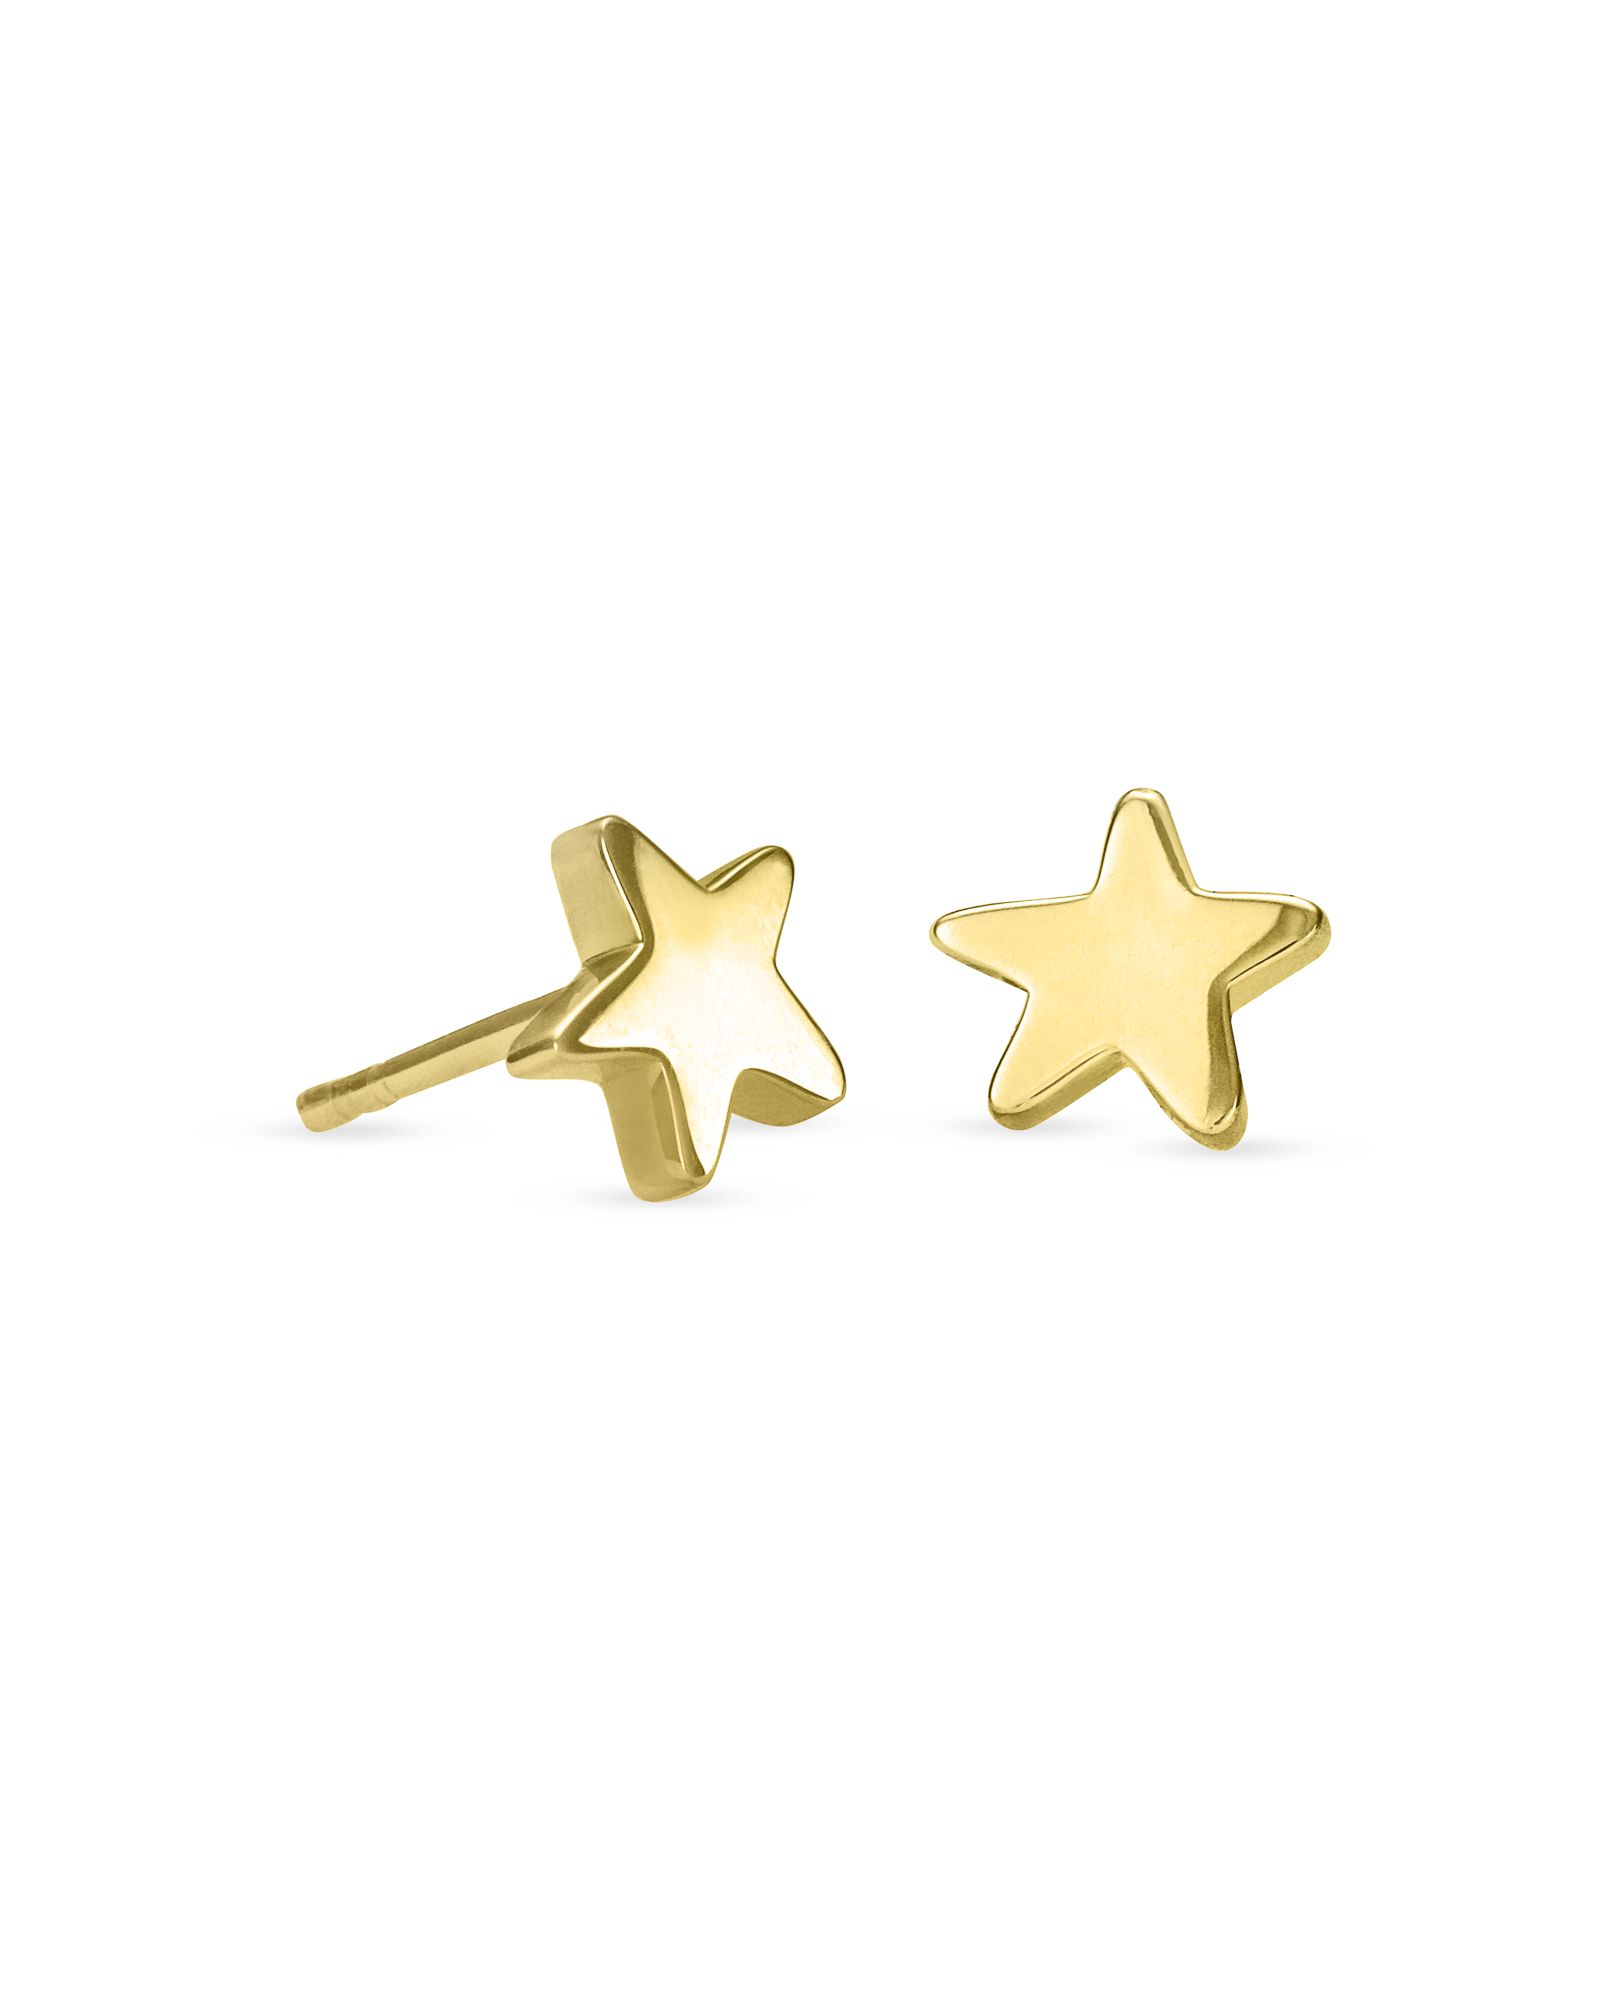 Jae Star Stud Earrings in 18k Gold Vermeil | Kendra Scott